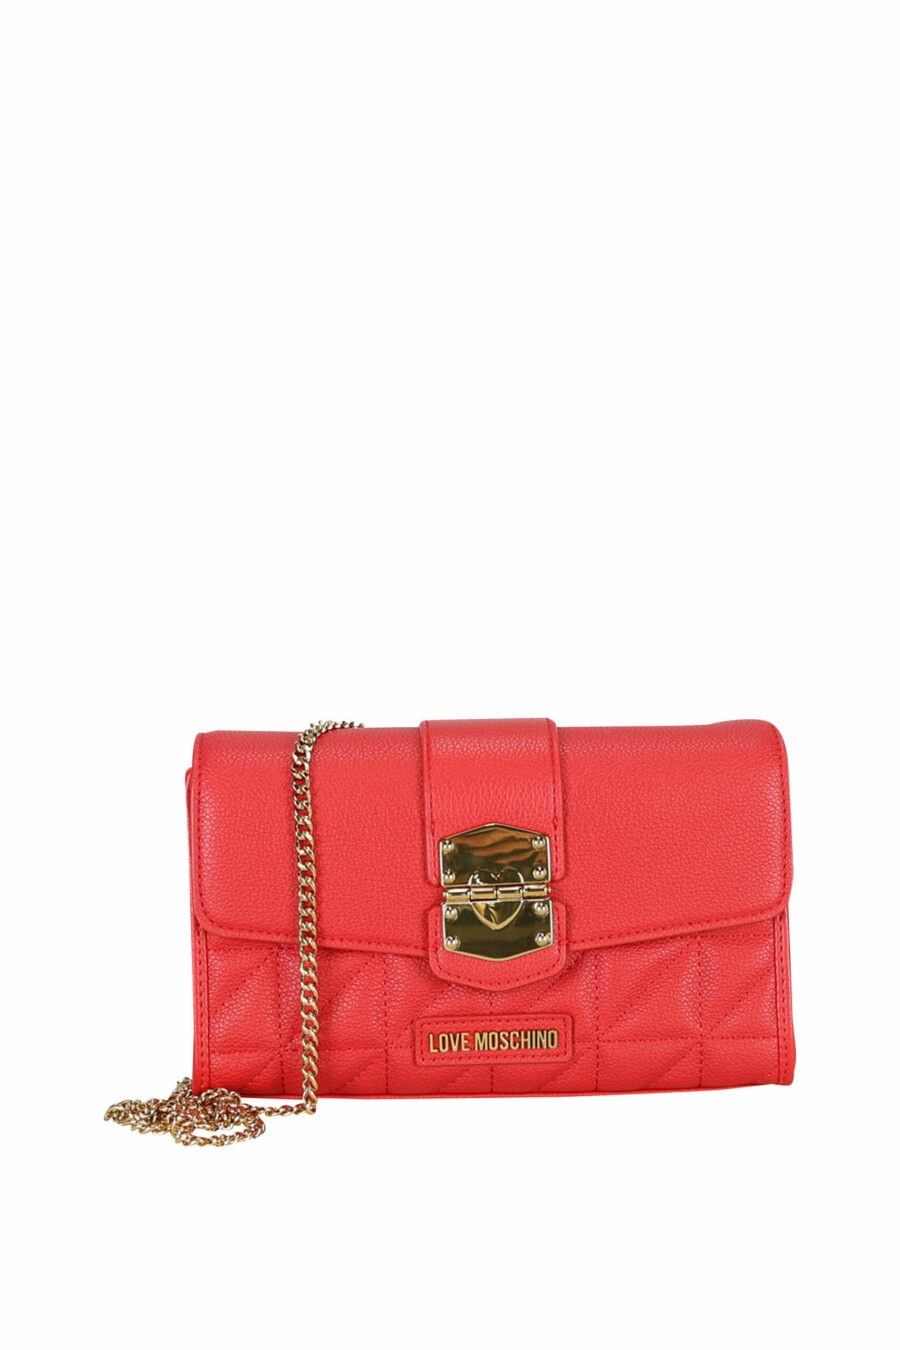 Red "flap" shoulder bag with gold metal heart logo - 8050537398776 scaled